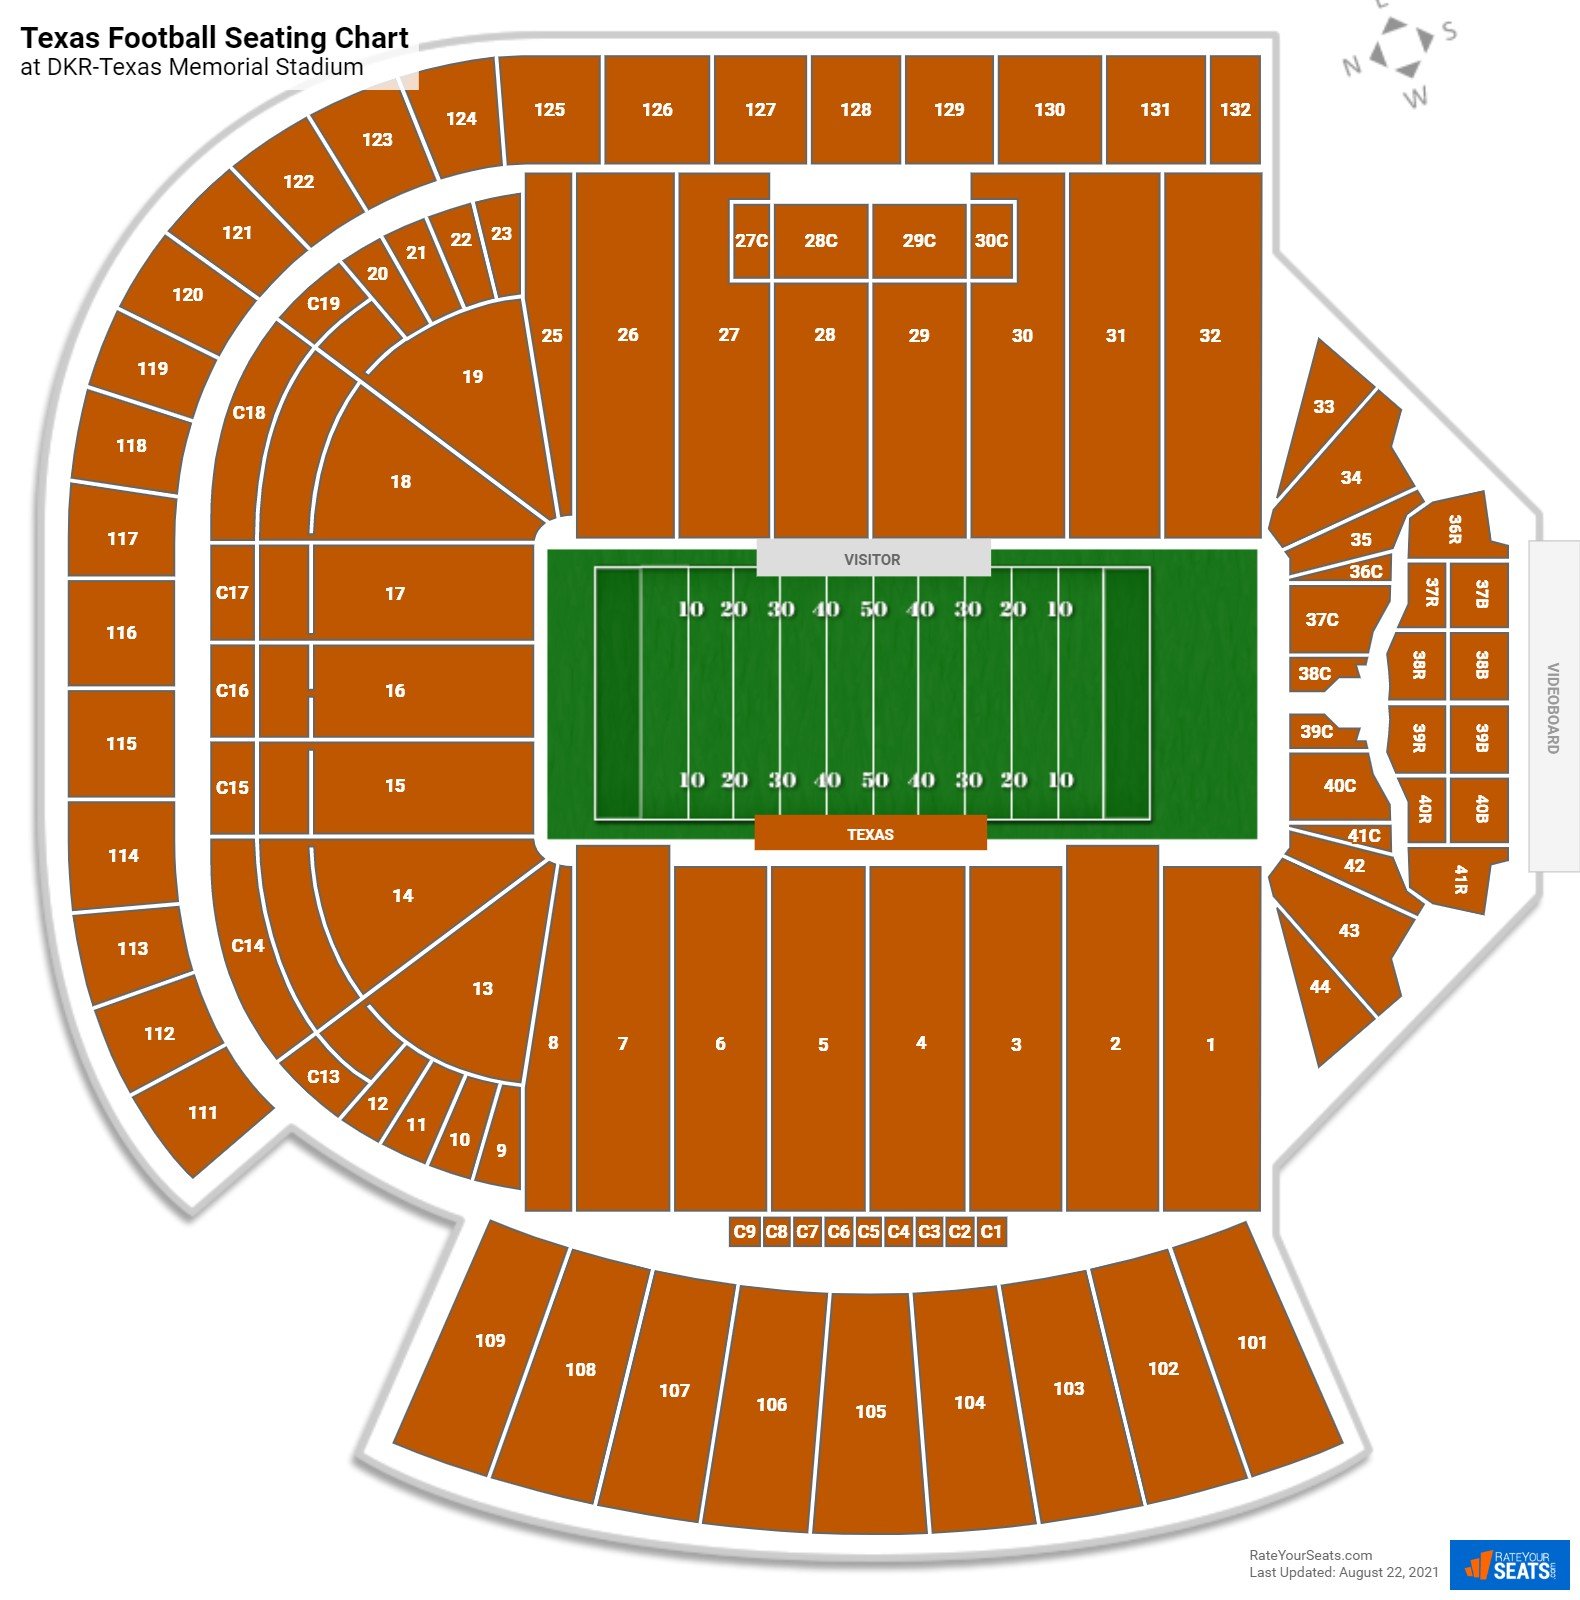 Texas Longhorns Seating Chart at DKR-Texas Memorial Stadium